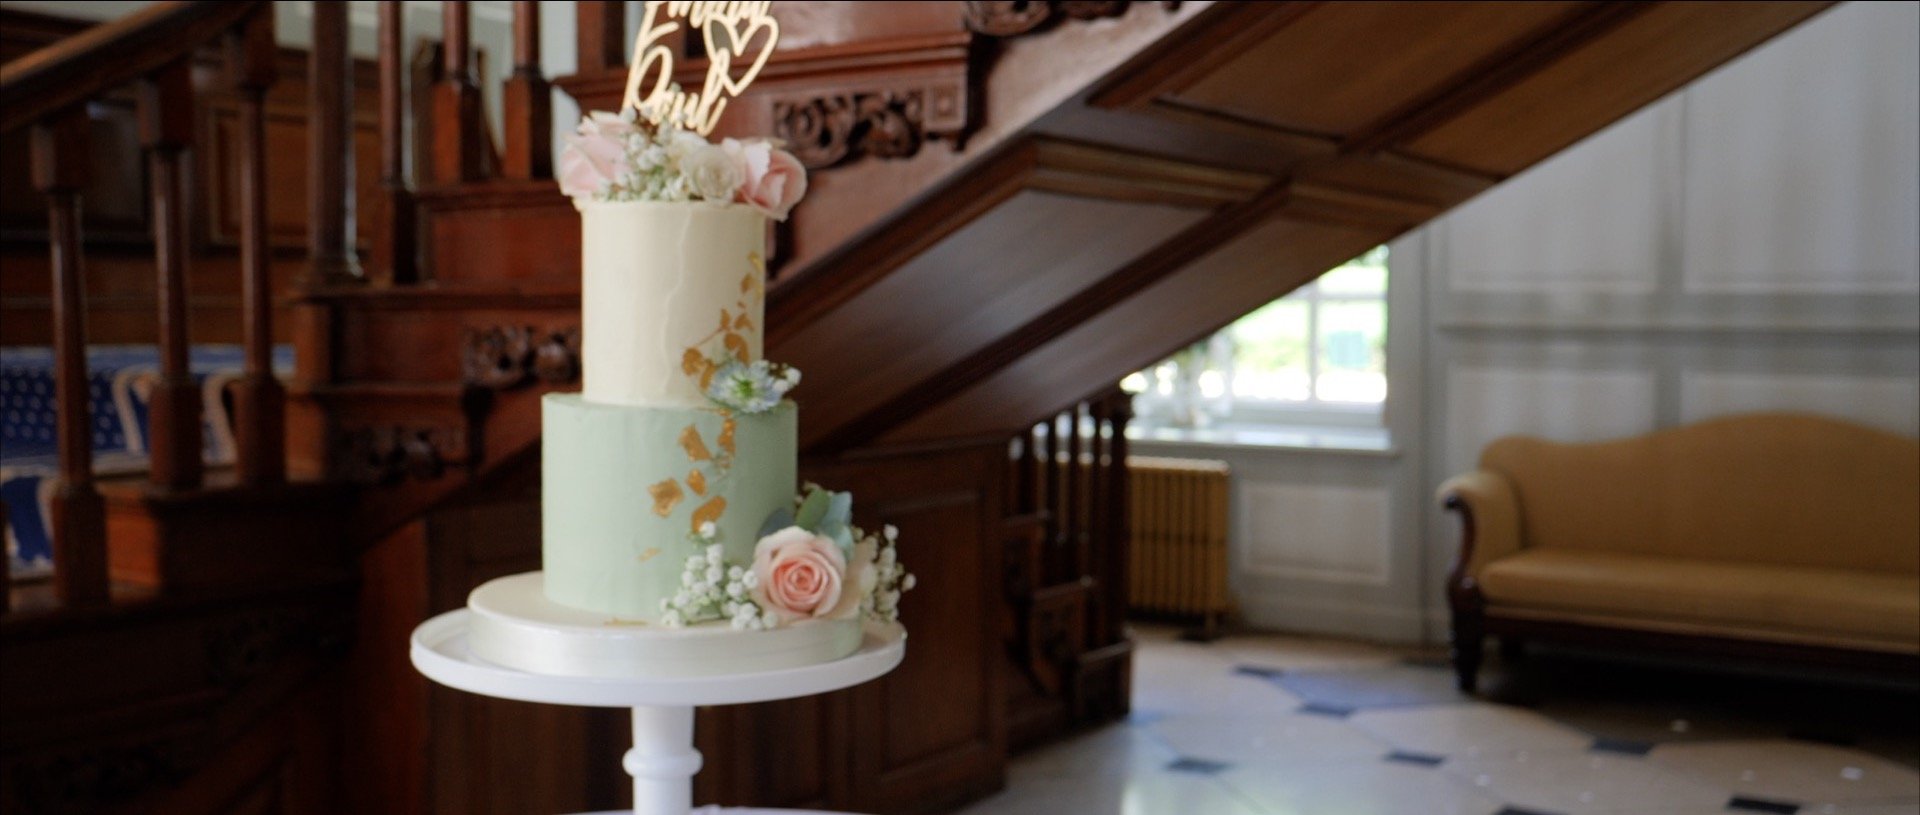 The wedding cake at gosfield hall.jpg